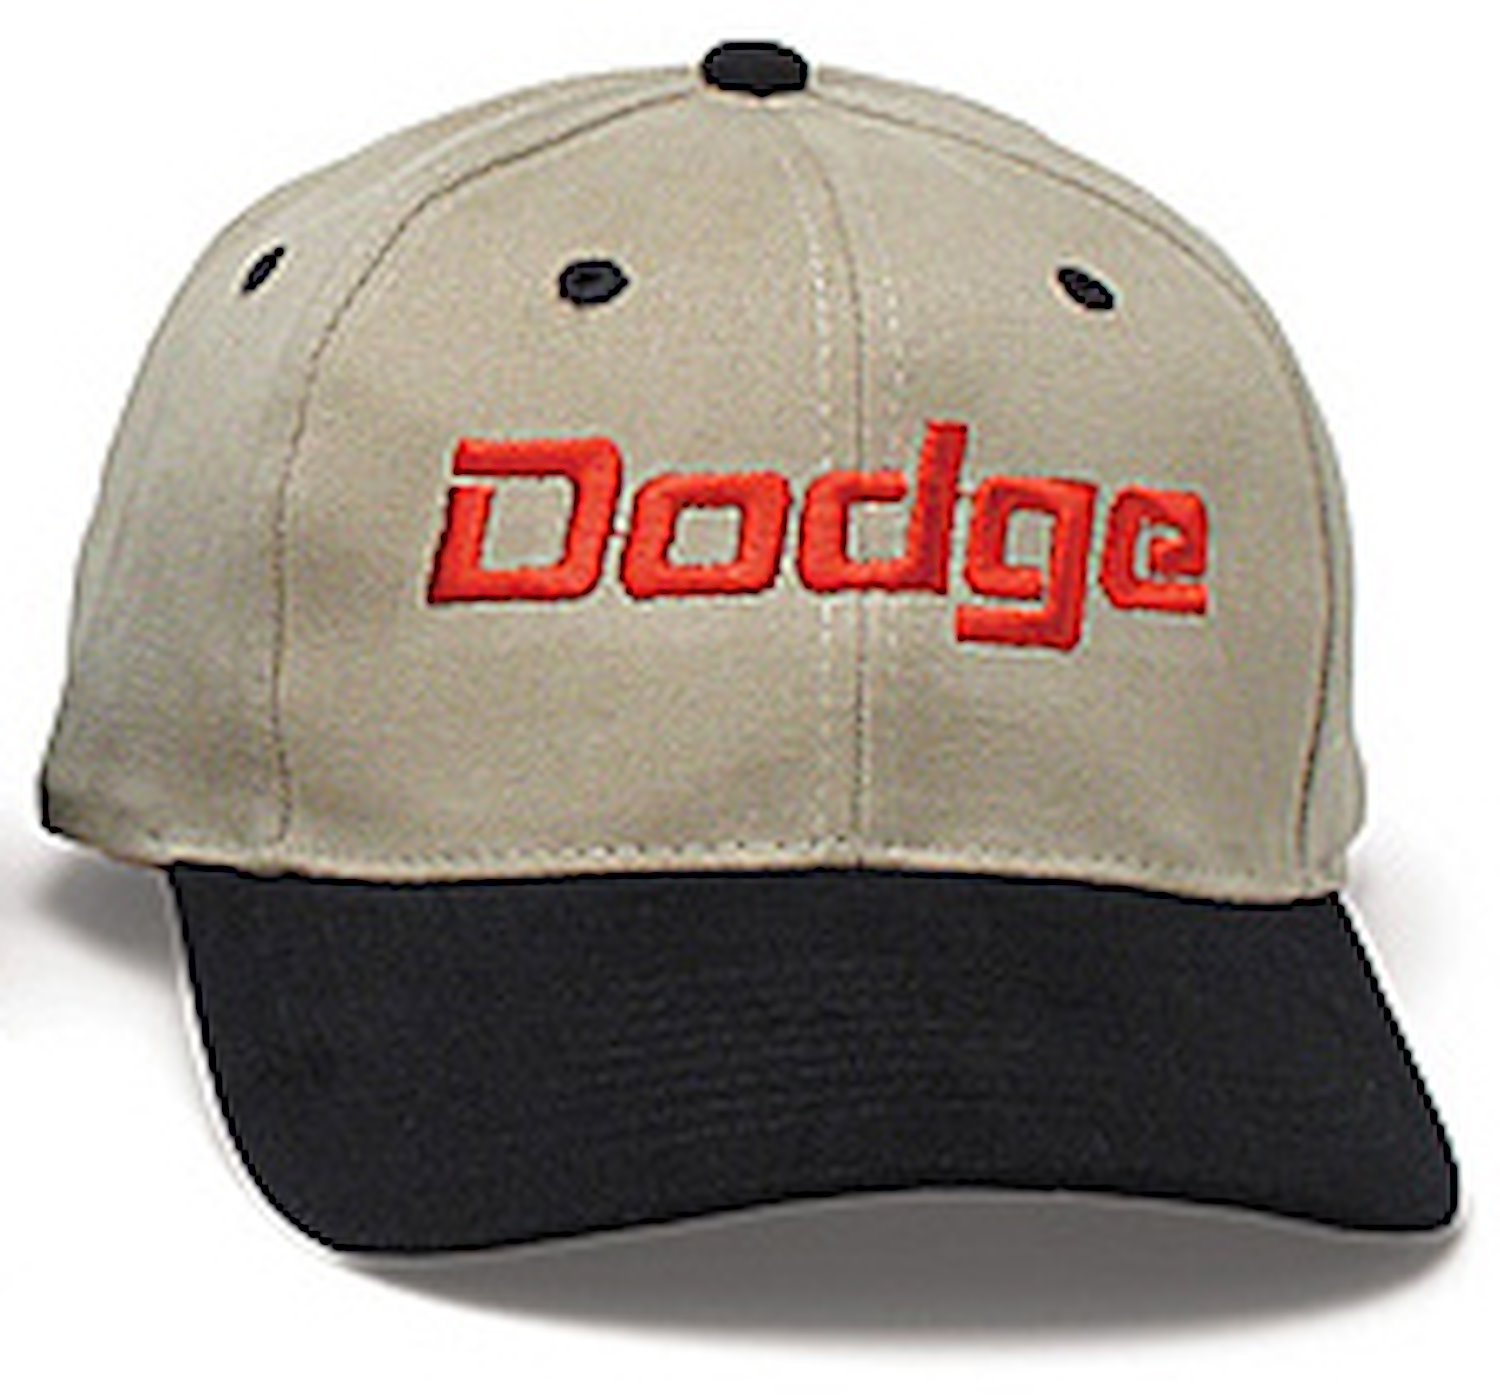 JEGS H115 Dodge Hat